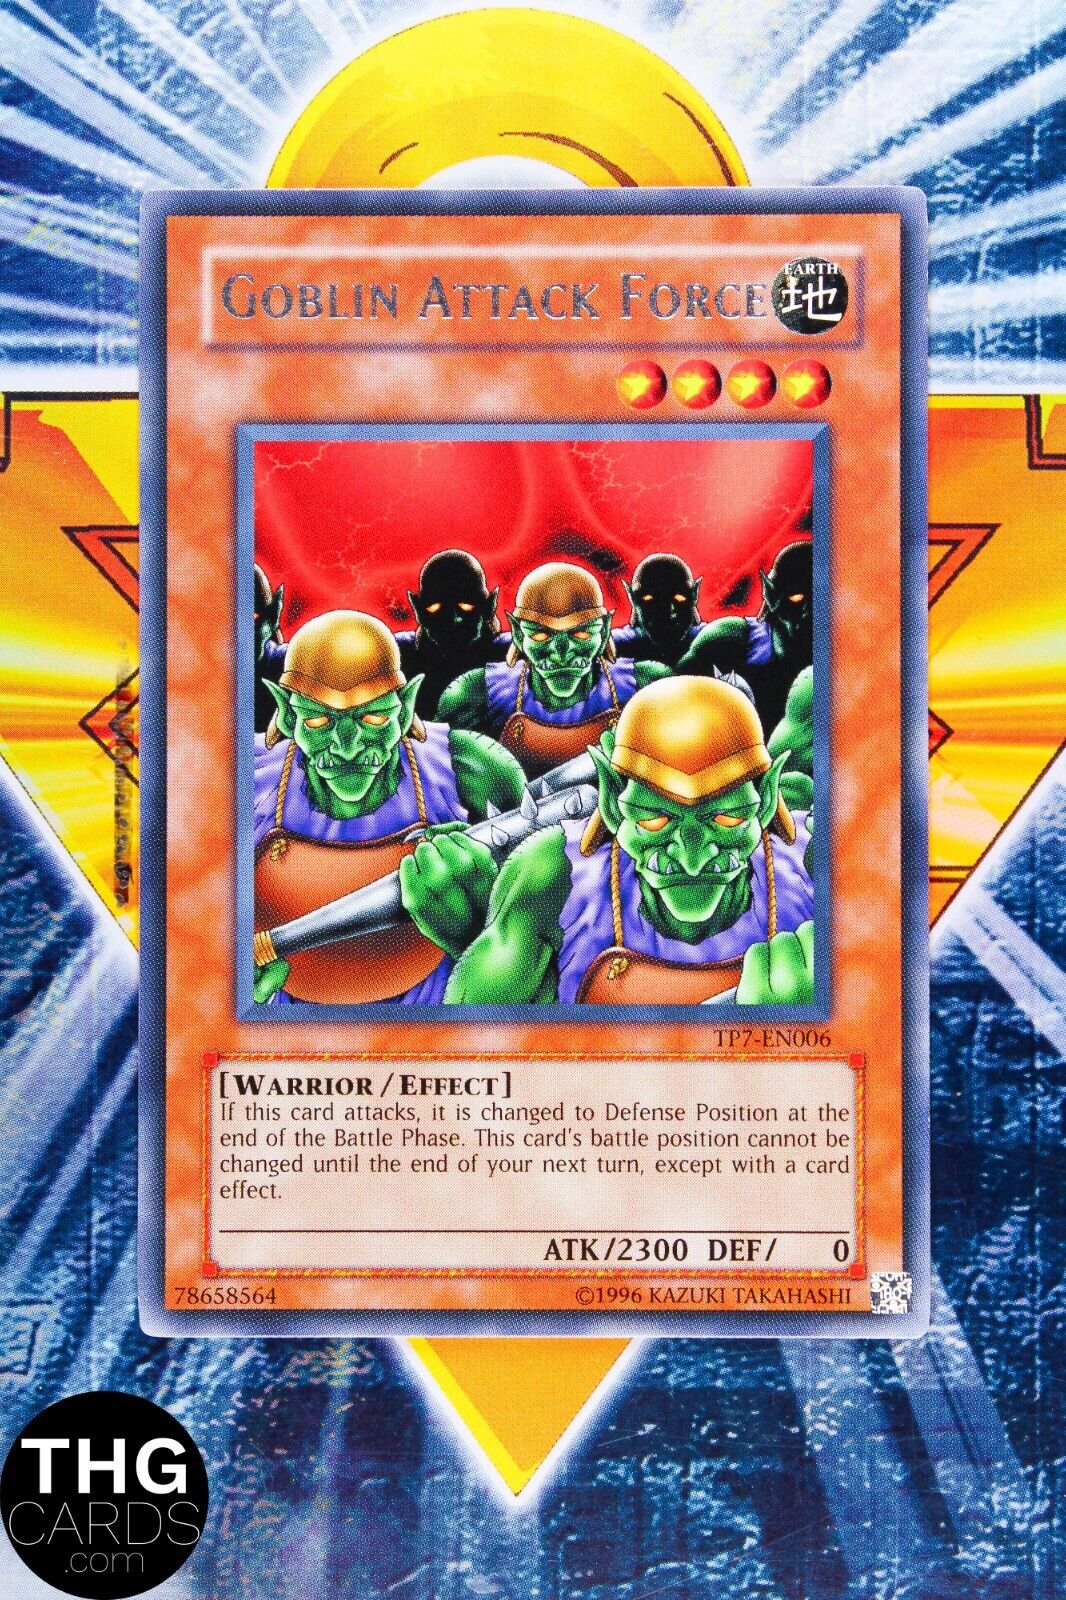 Goblin Attack Force TP7-EN006 Rare Yugioh Card